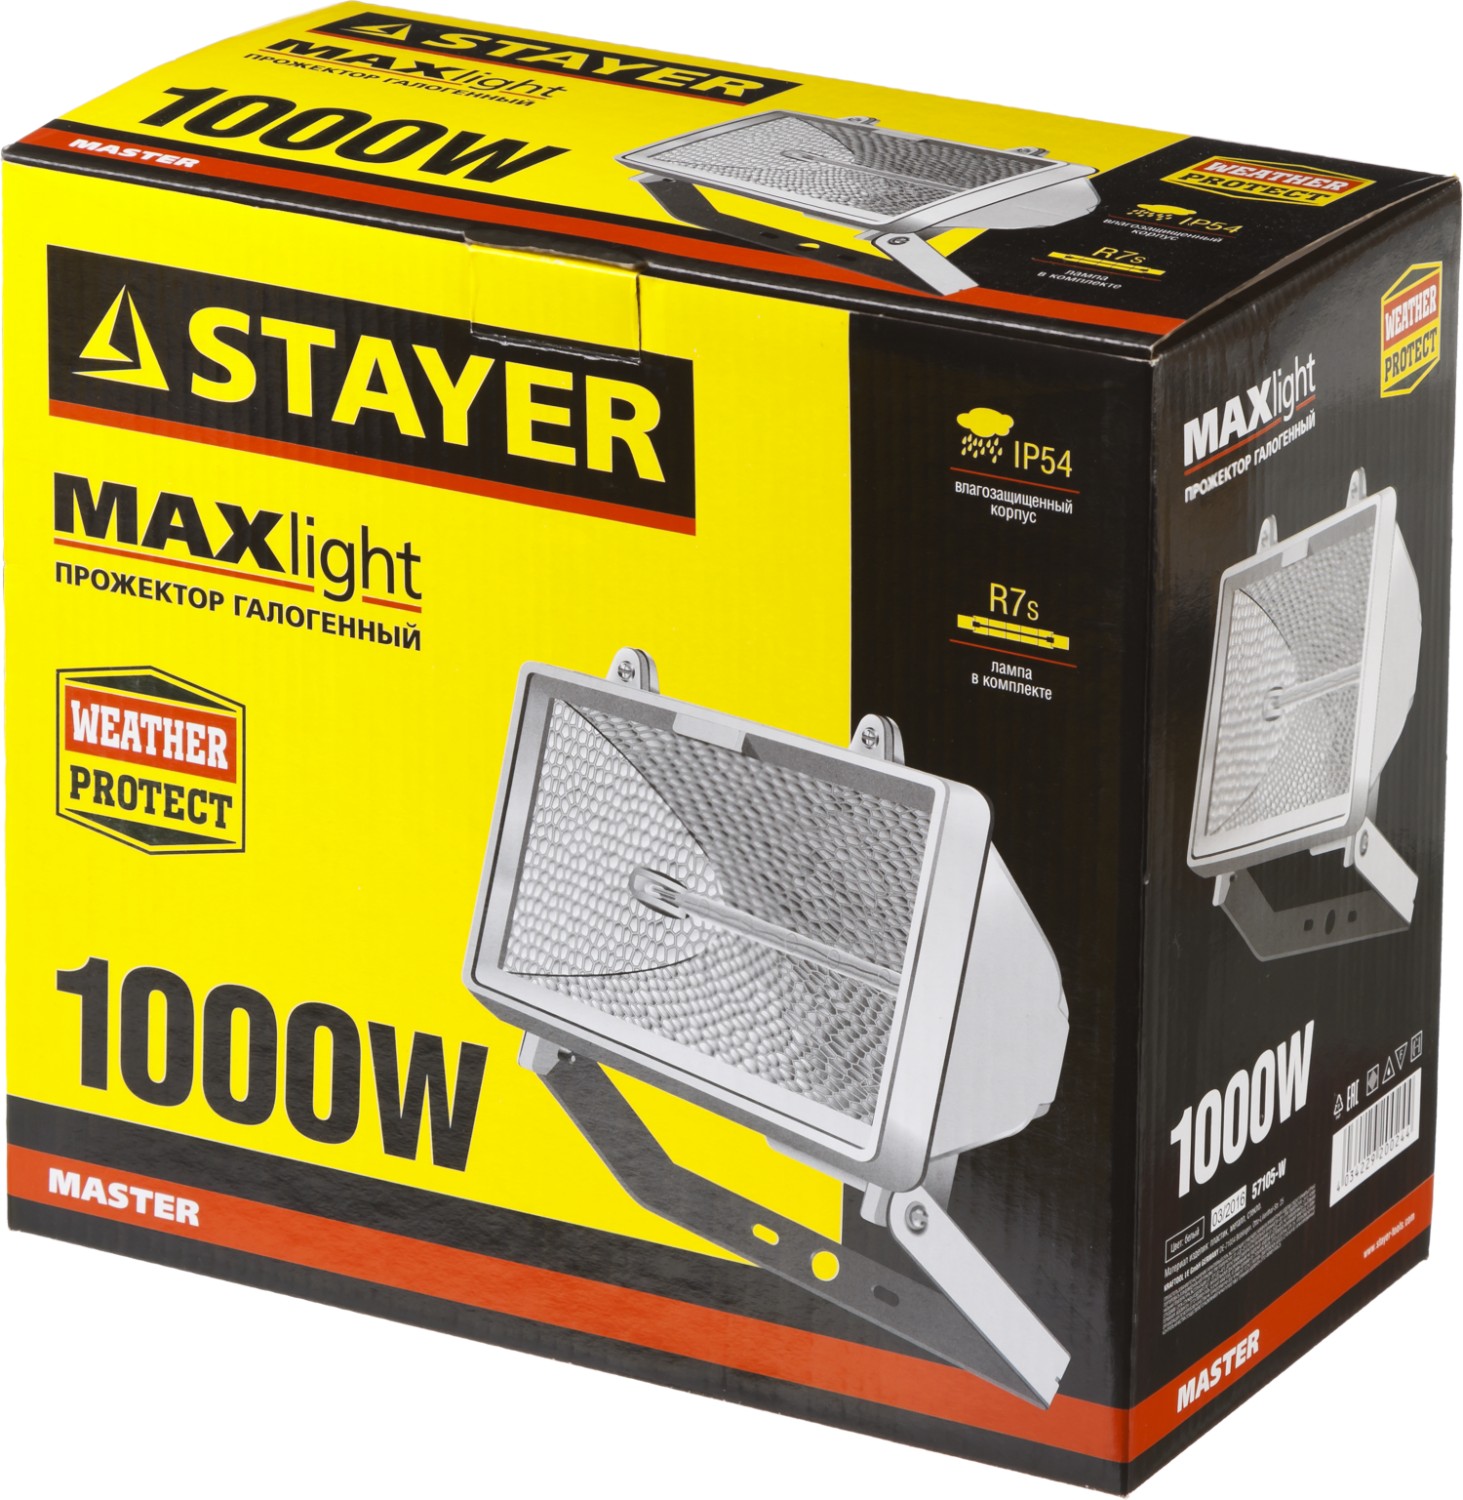 STAYER MAXLight прожектор 1000 Вт галогенный, белый